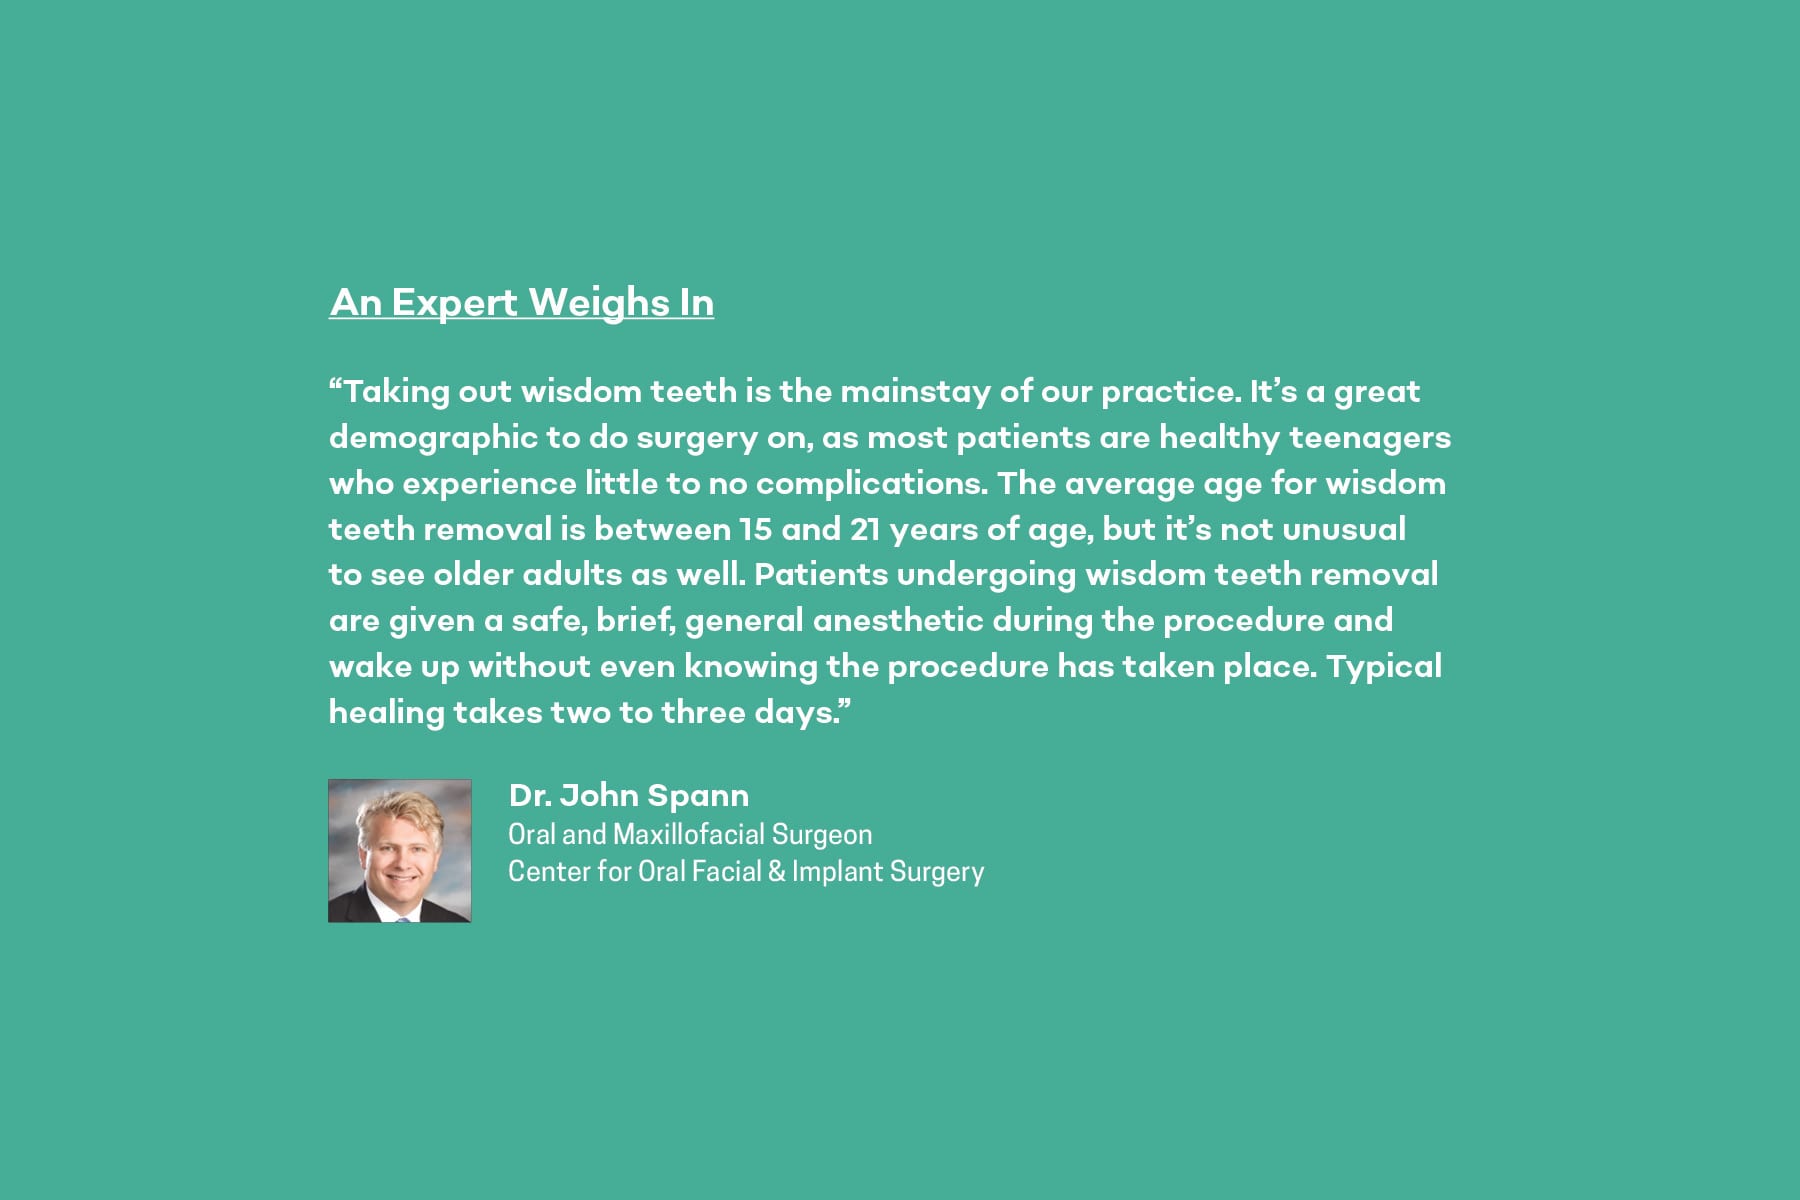 Dr. John Spann shares his expert opinion on wisdom teeth removal